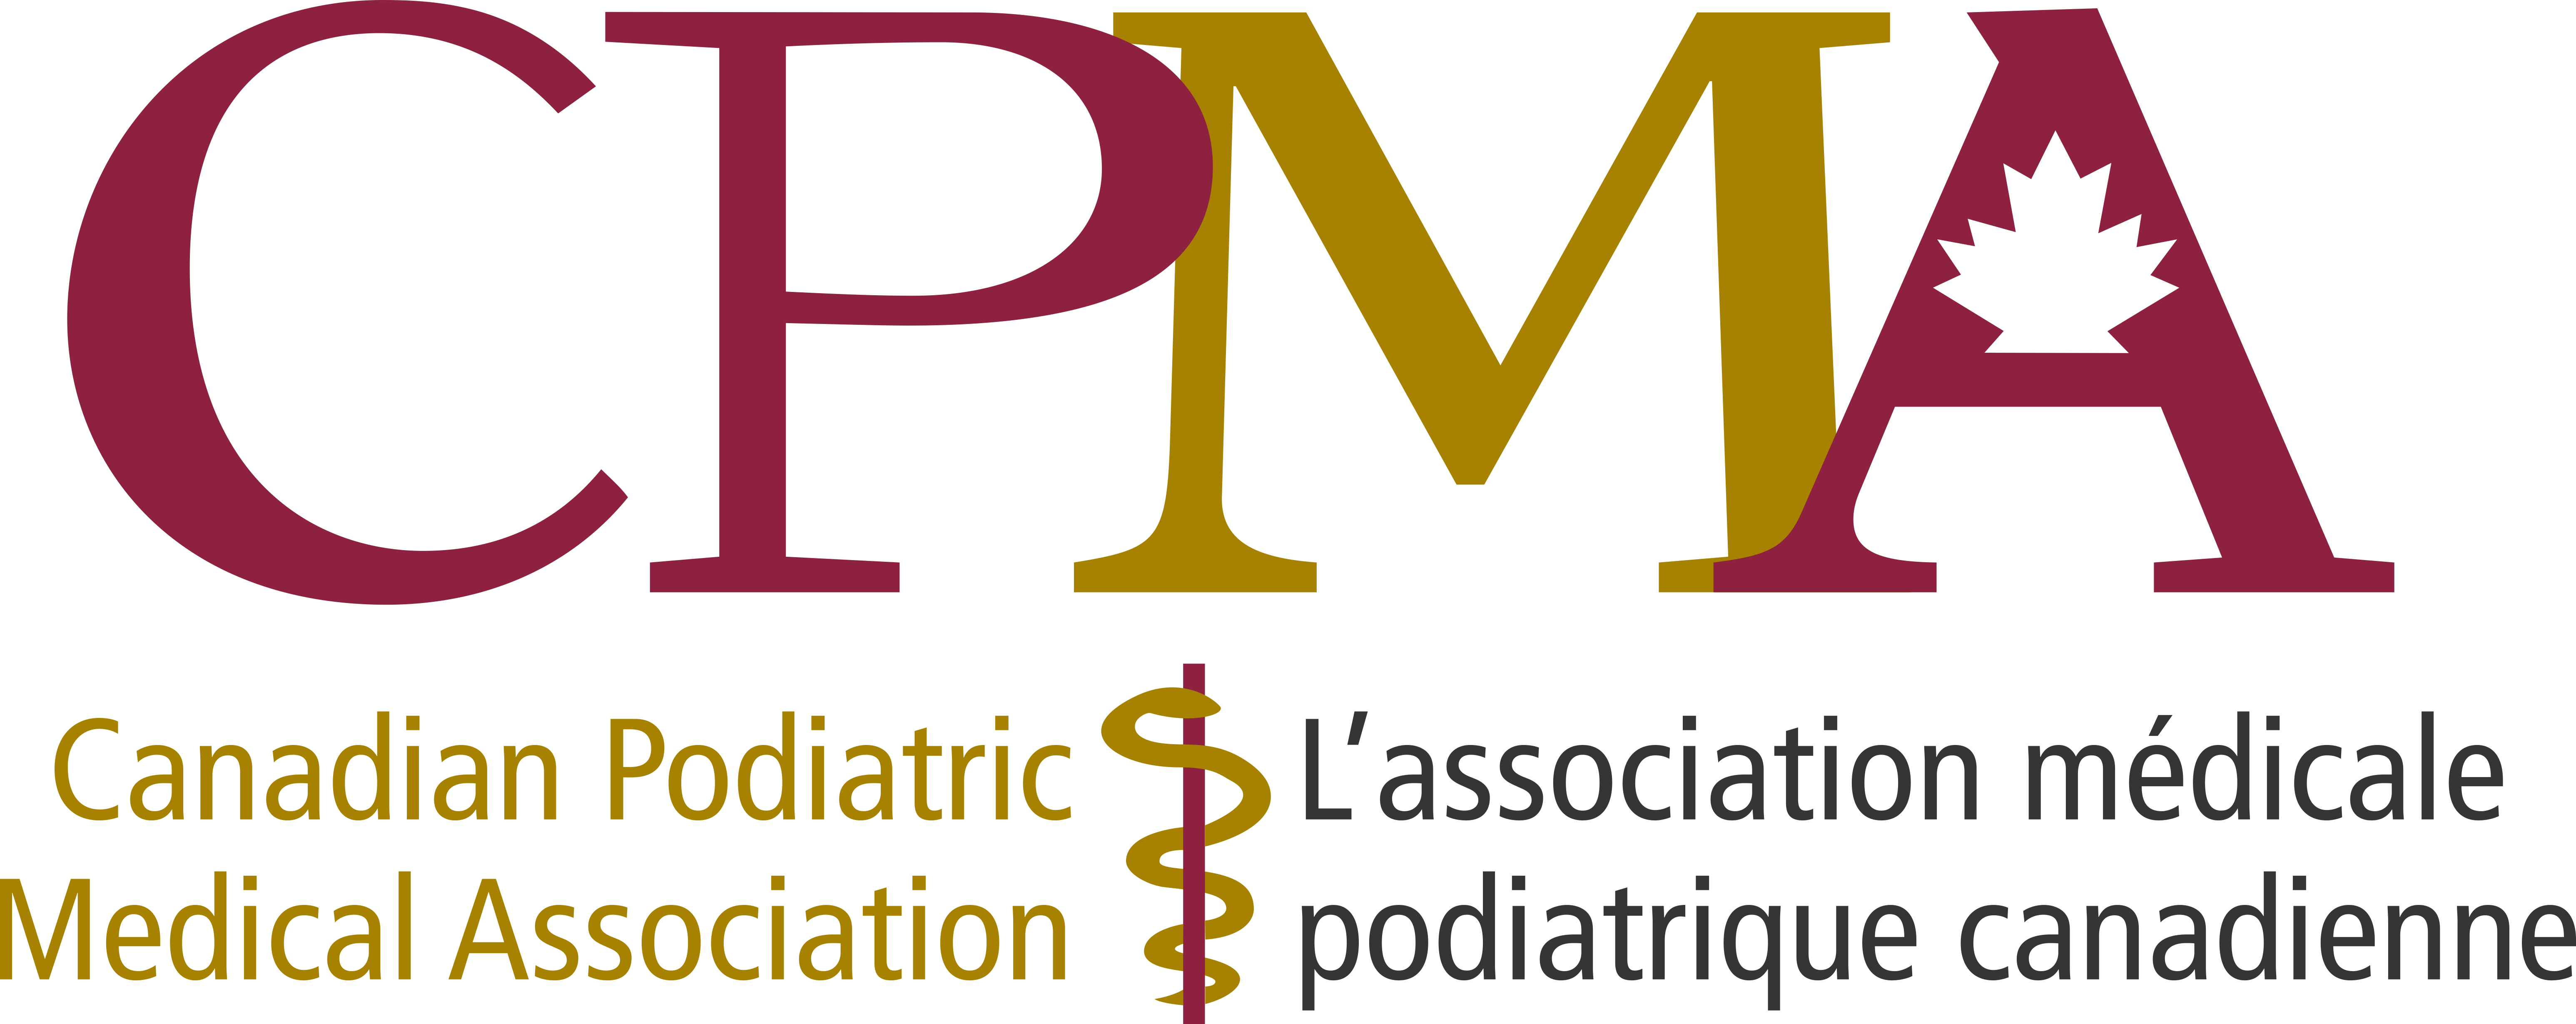 CPMA_logo